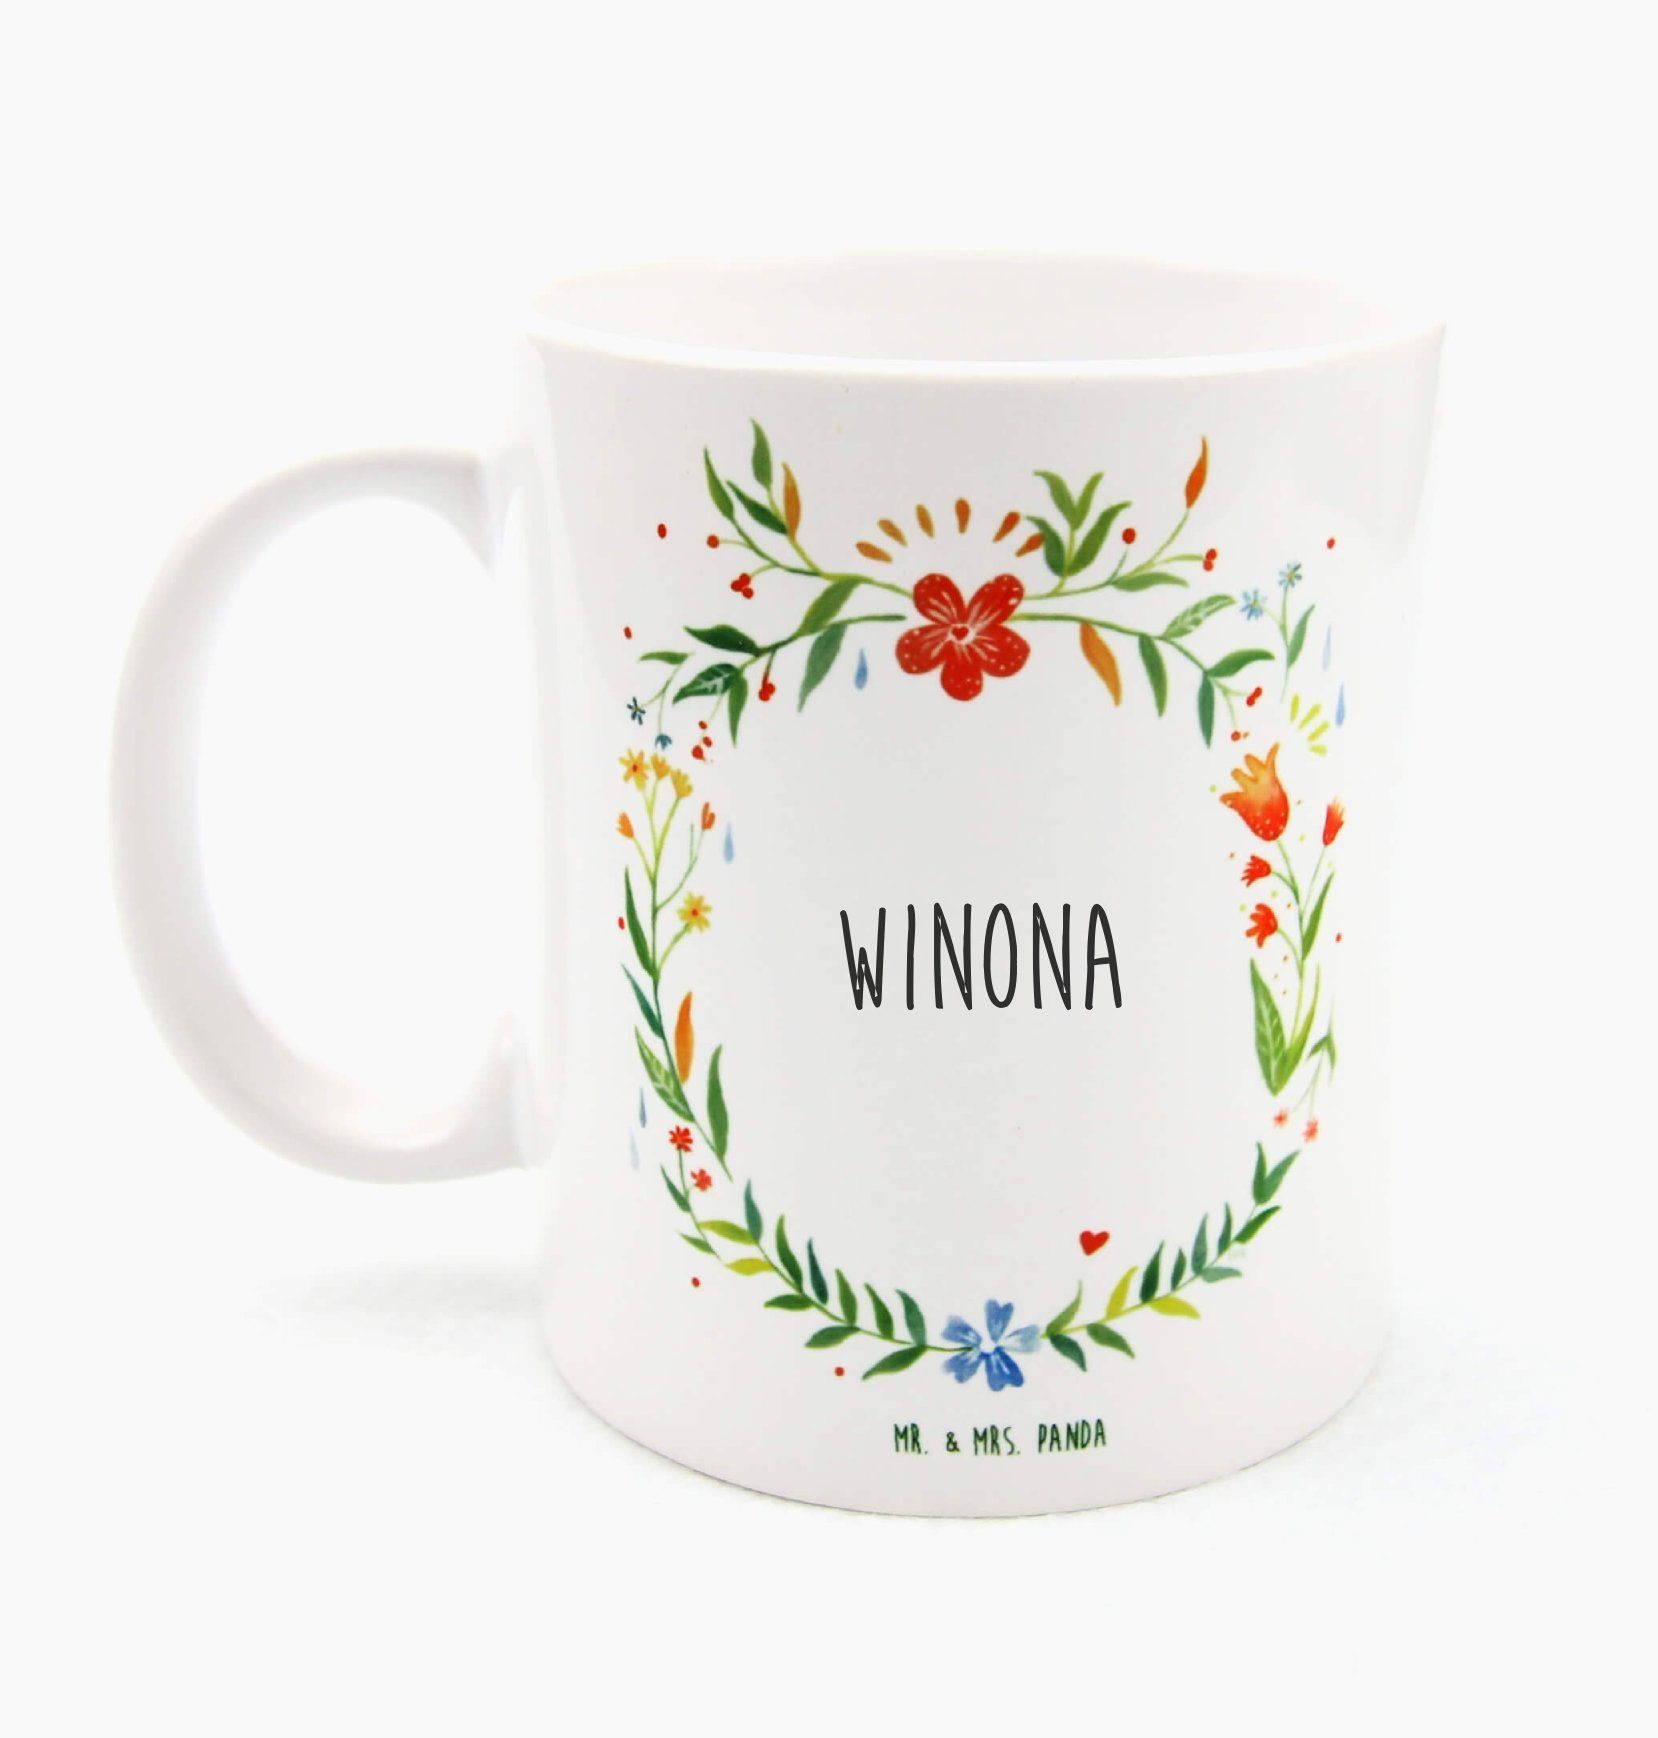 Mr. & Mrs. Panda Tasse Winona - Geschenk, Teetasse, Kaffeebecher, Tasse Motive, Keramiktasse, Keramik